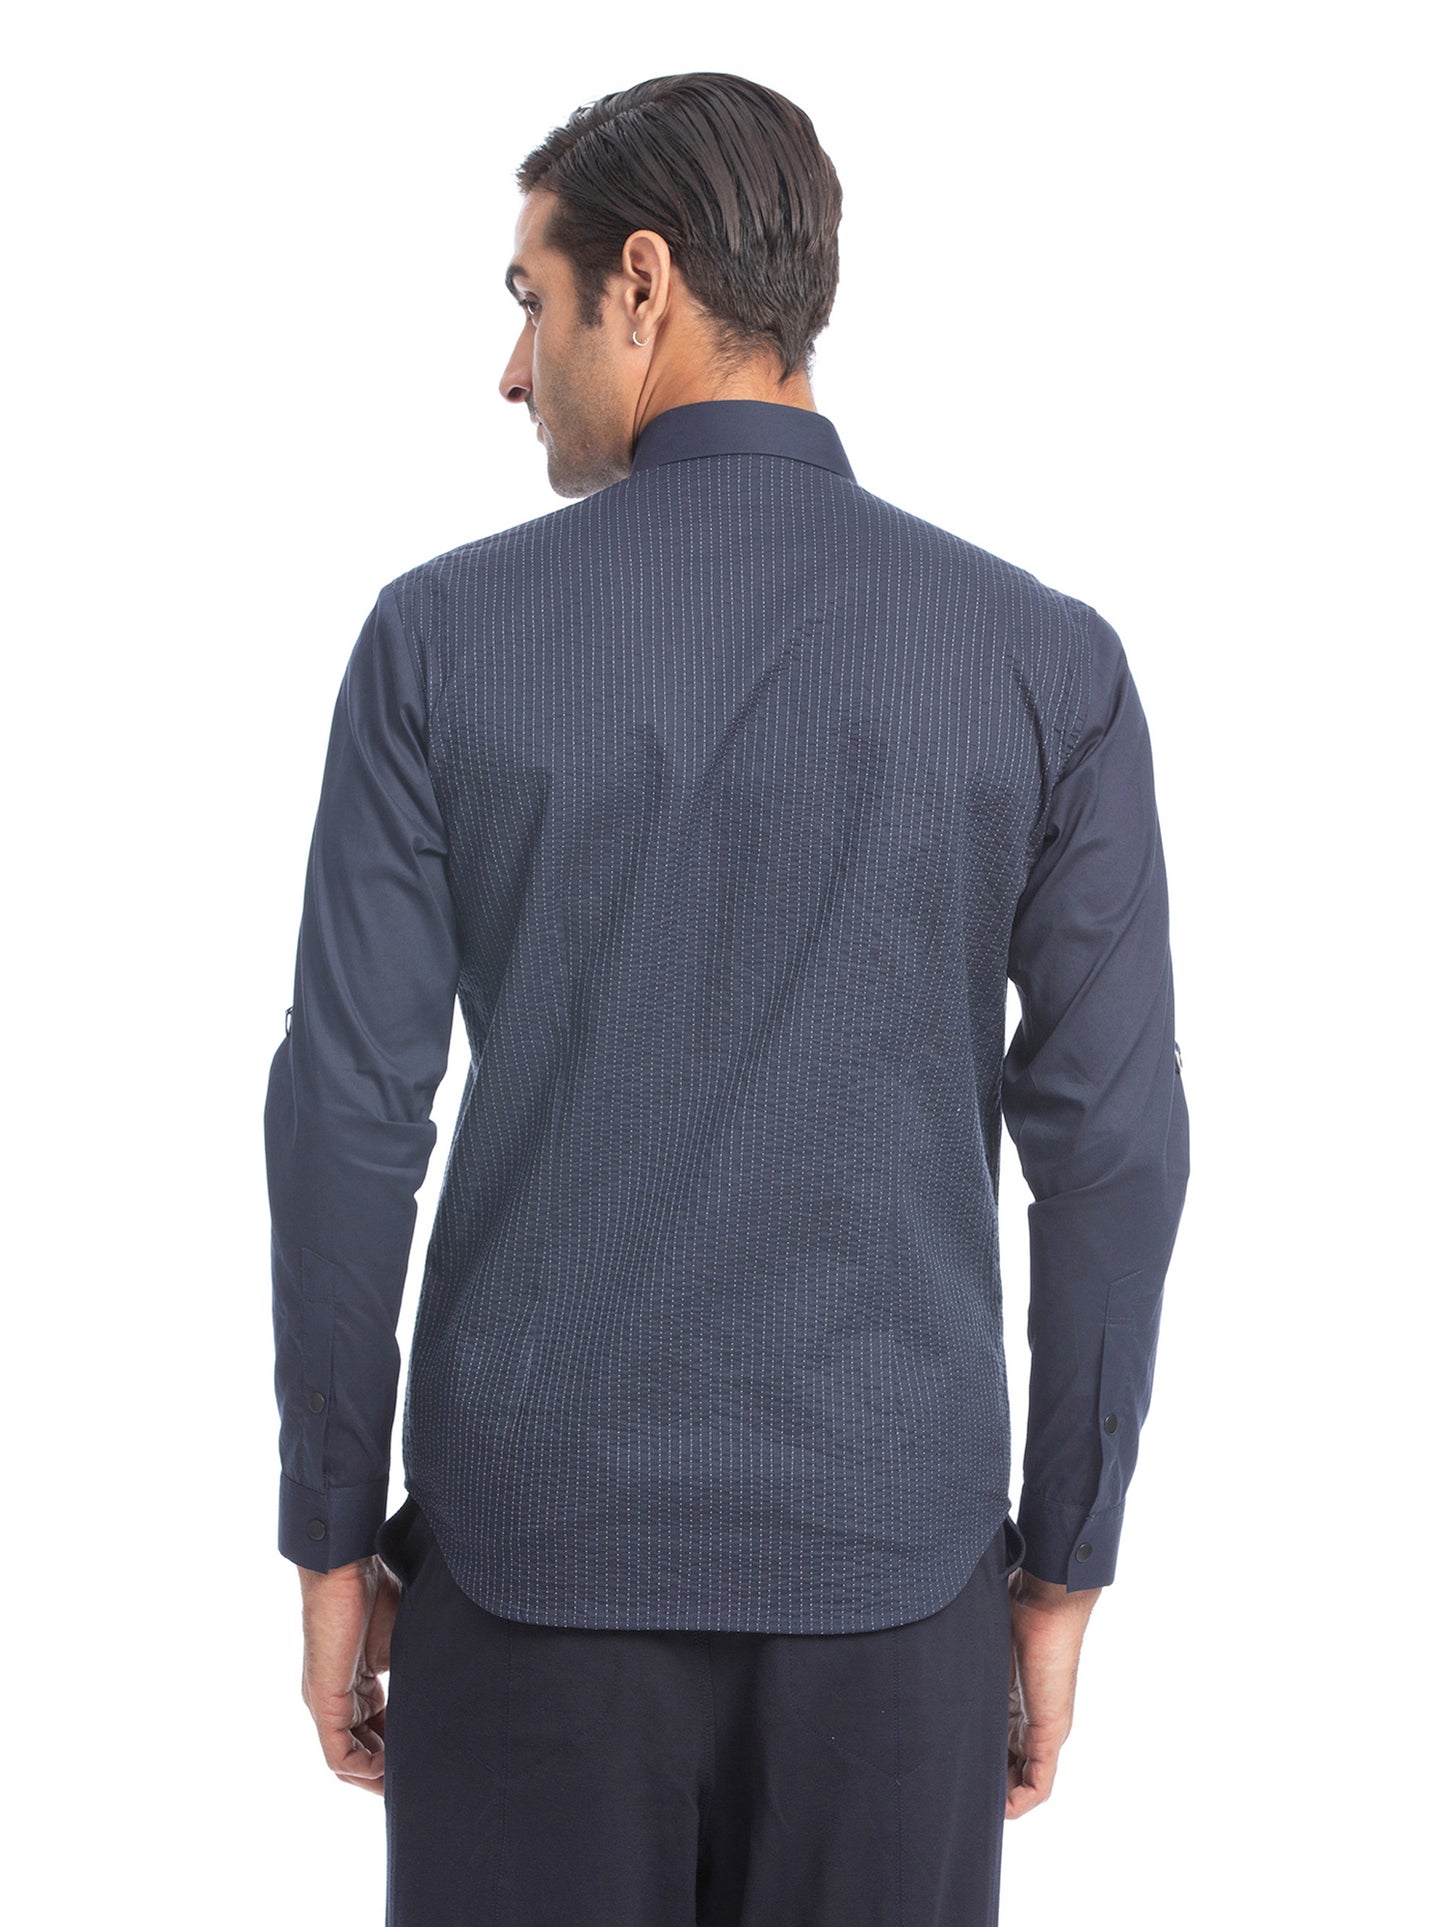 Stitch Line Panel Zipper Shirt